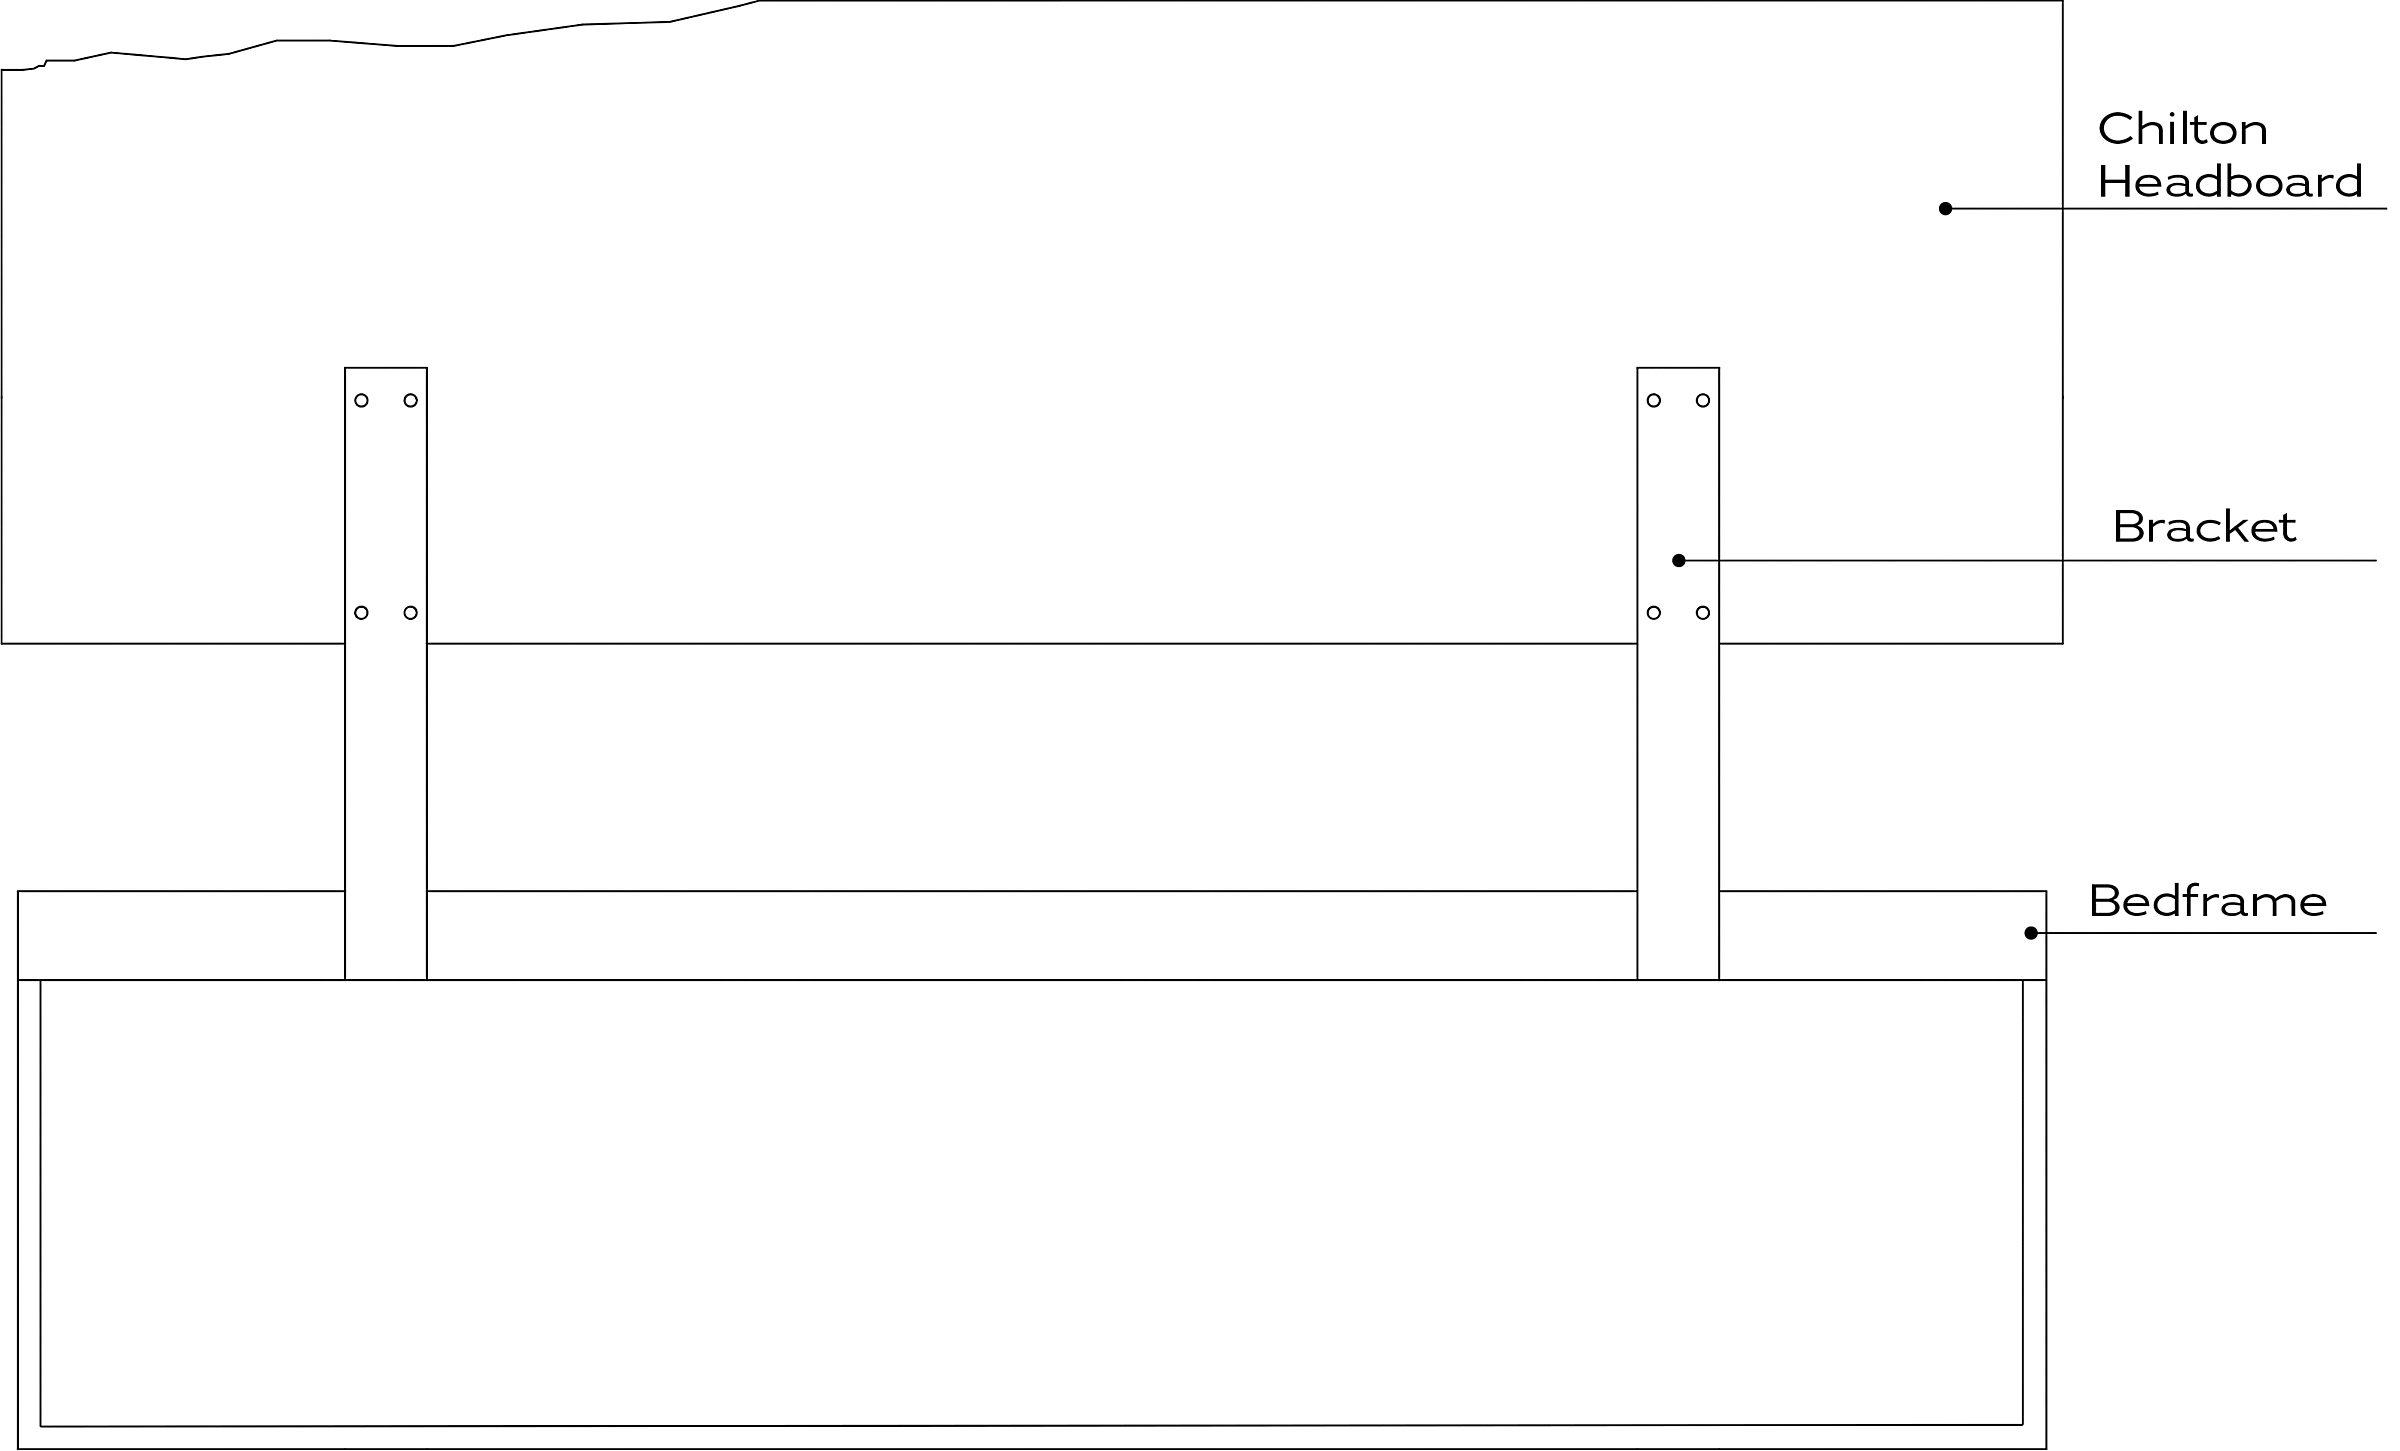 Line drawing of Chilton headboard.